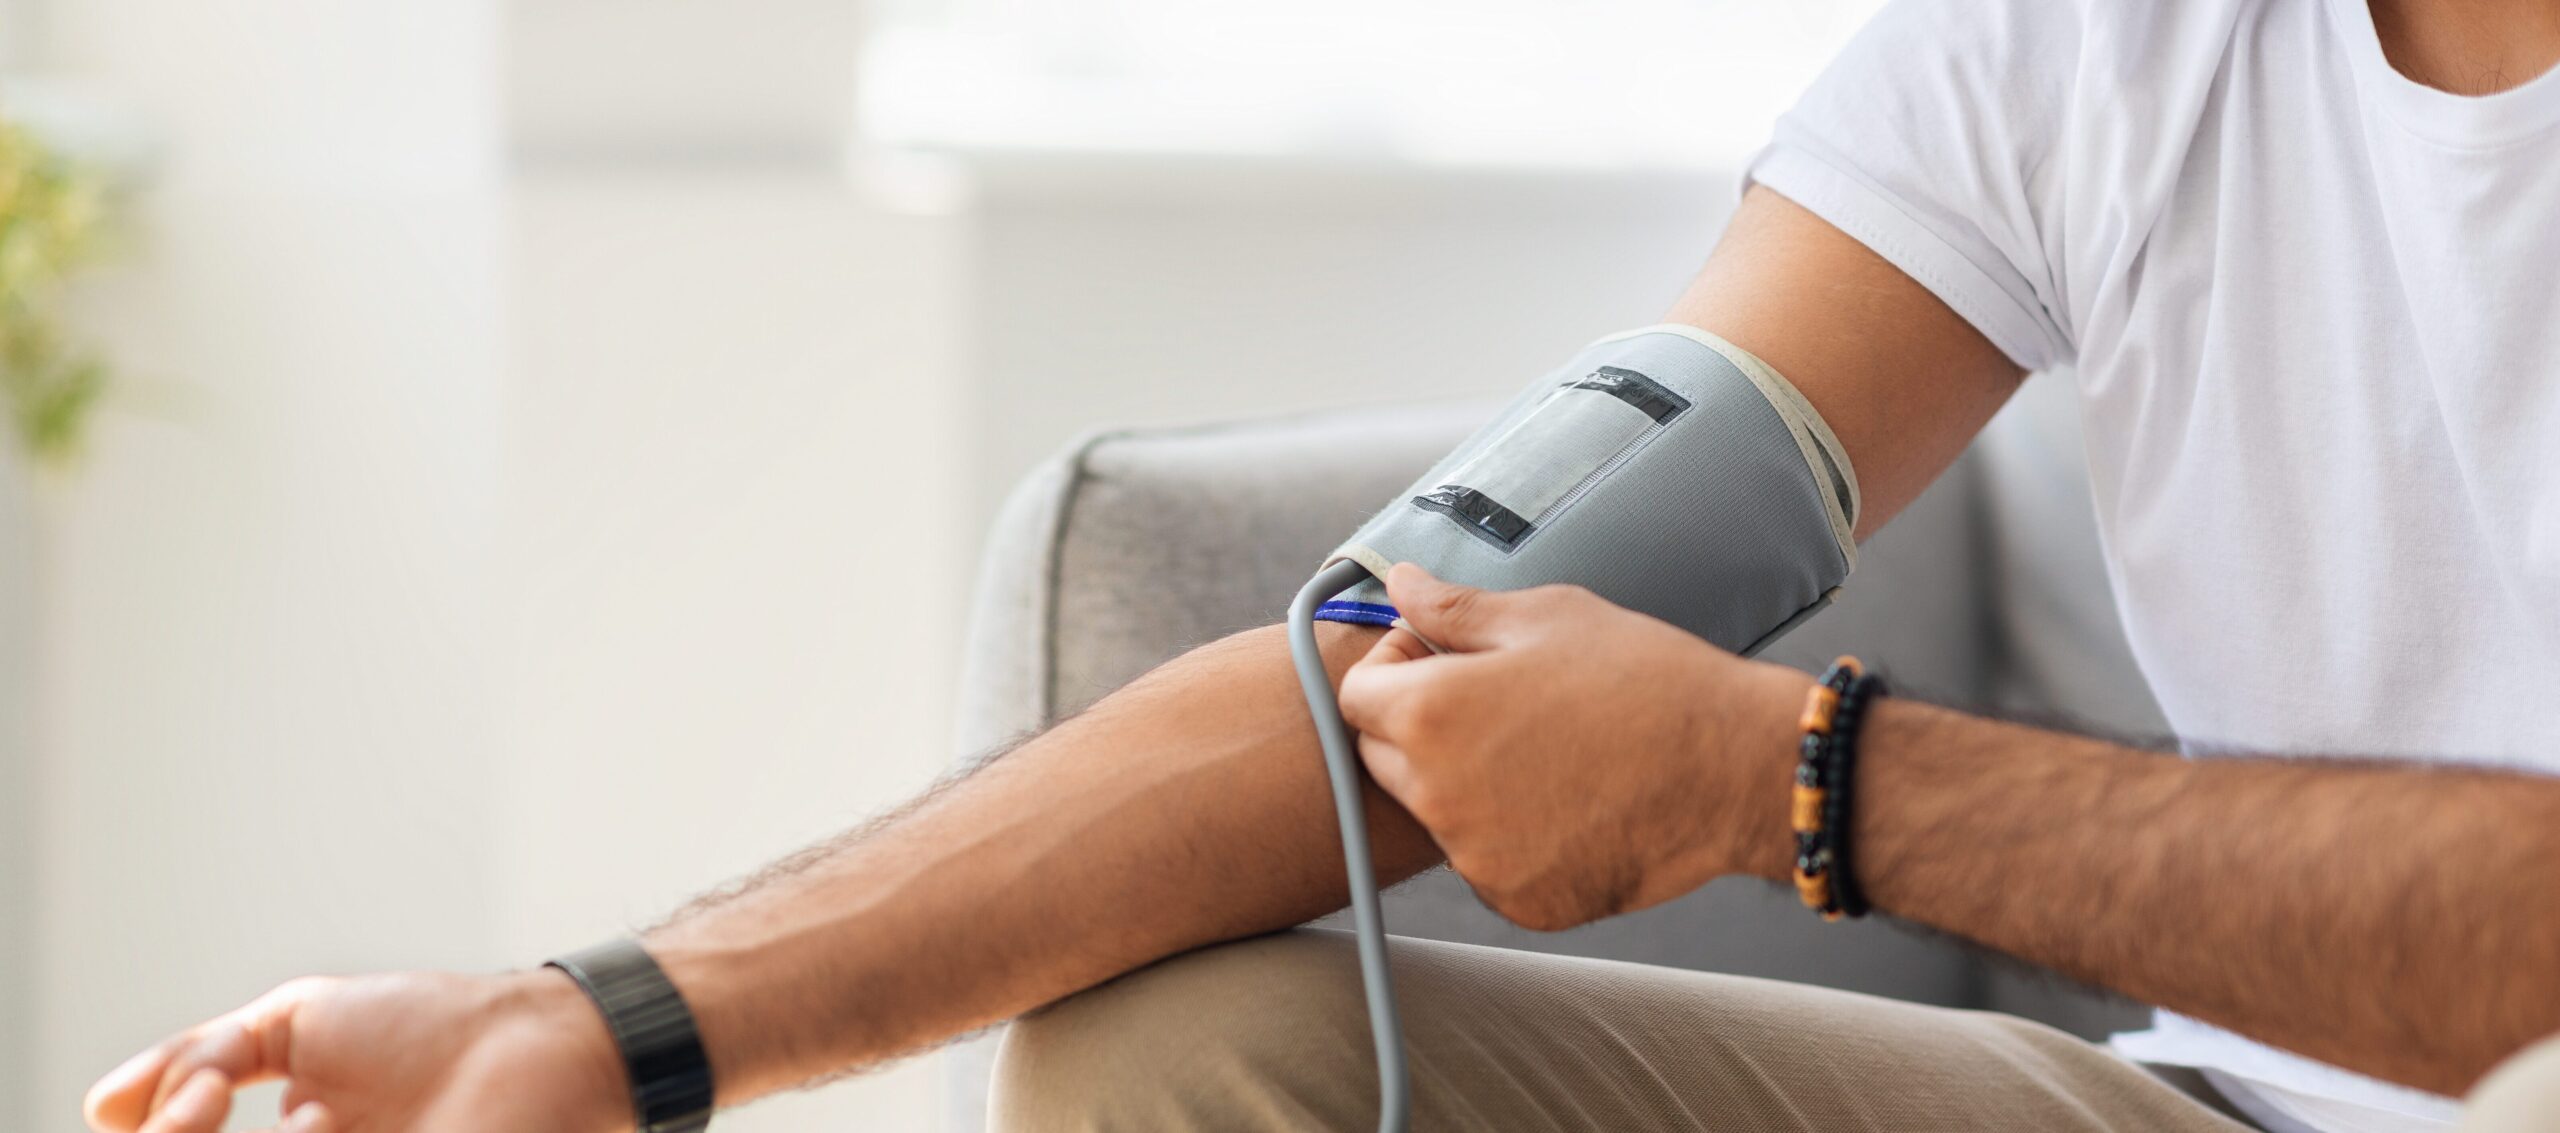 6 Natural Ways to Help Lower Blood Pressure